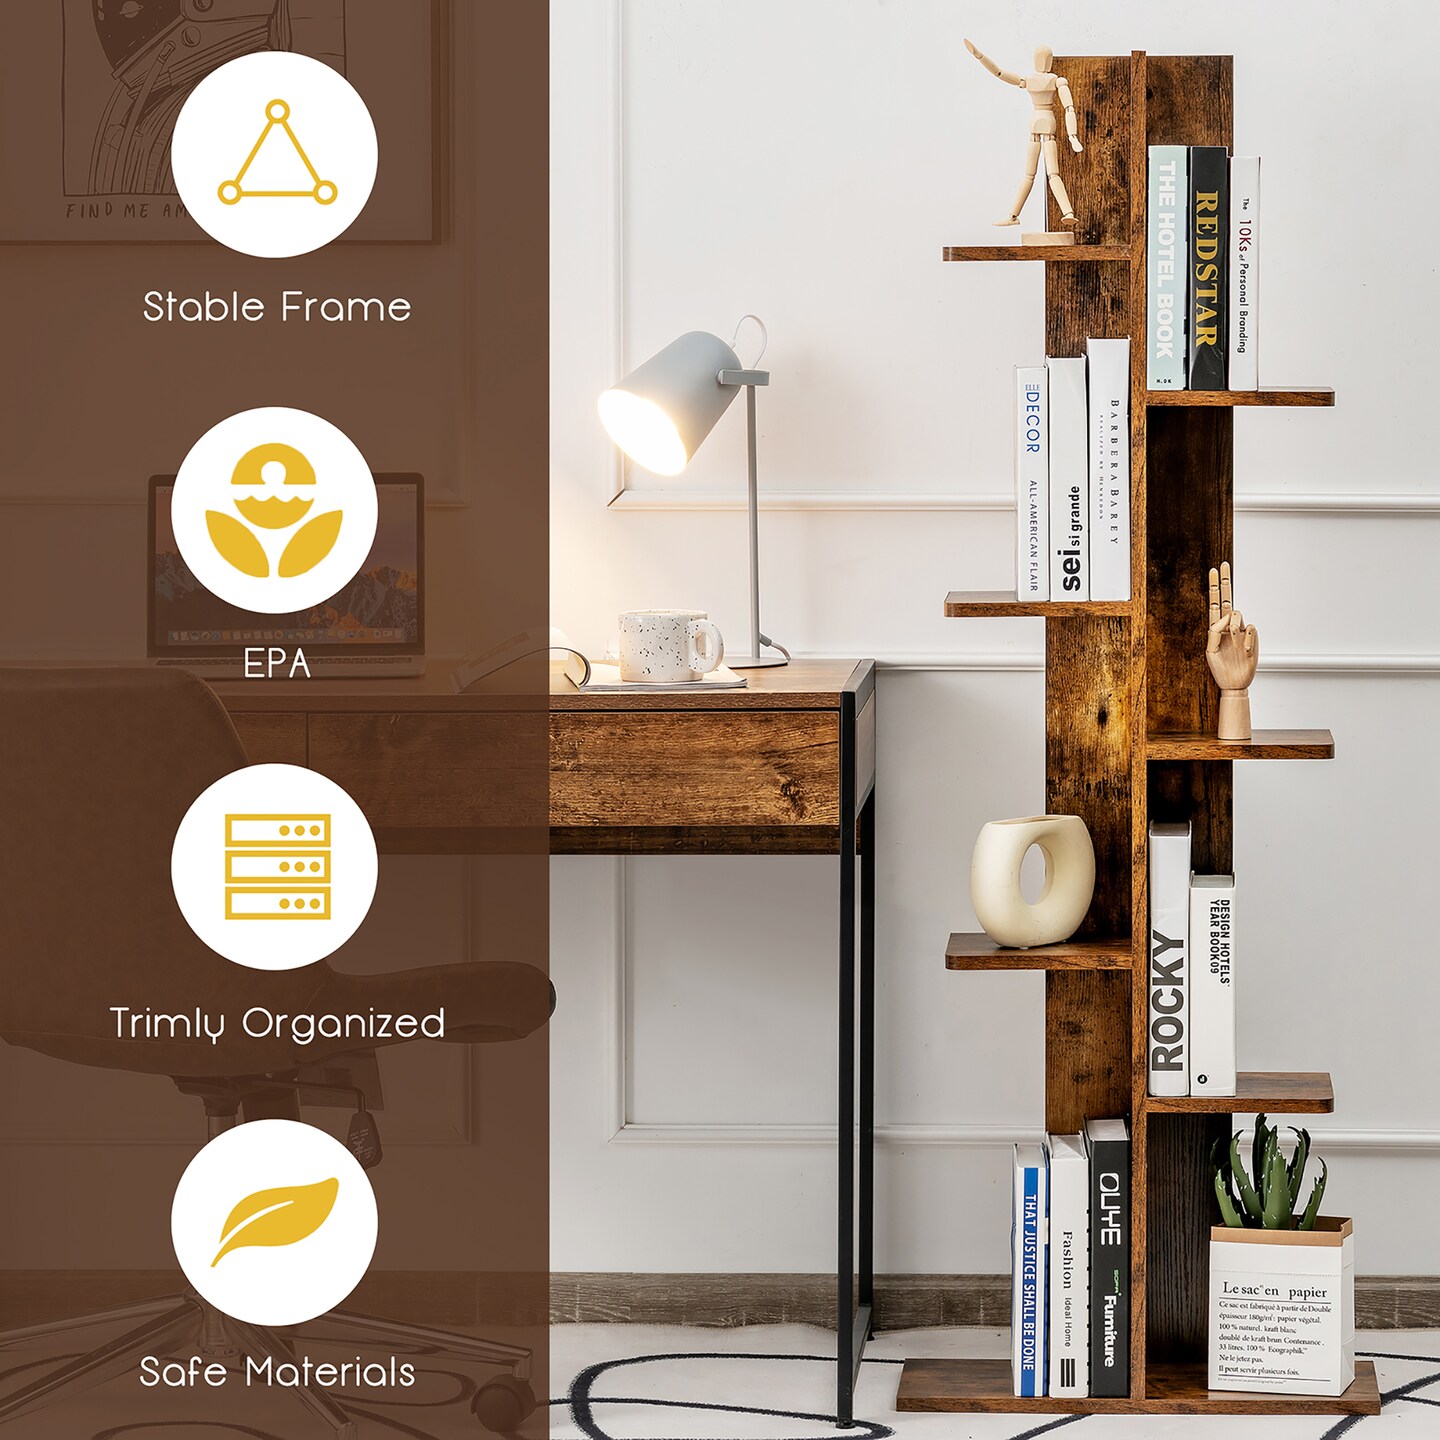 Costway Open Concept Bookcase Plant Display Shelf Rack Holder Wood Walnut\Brown